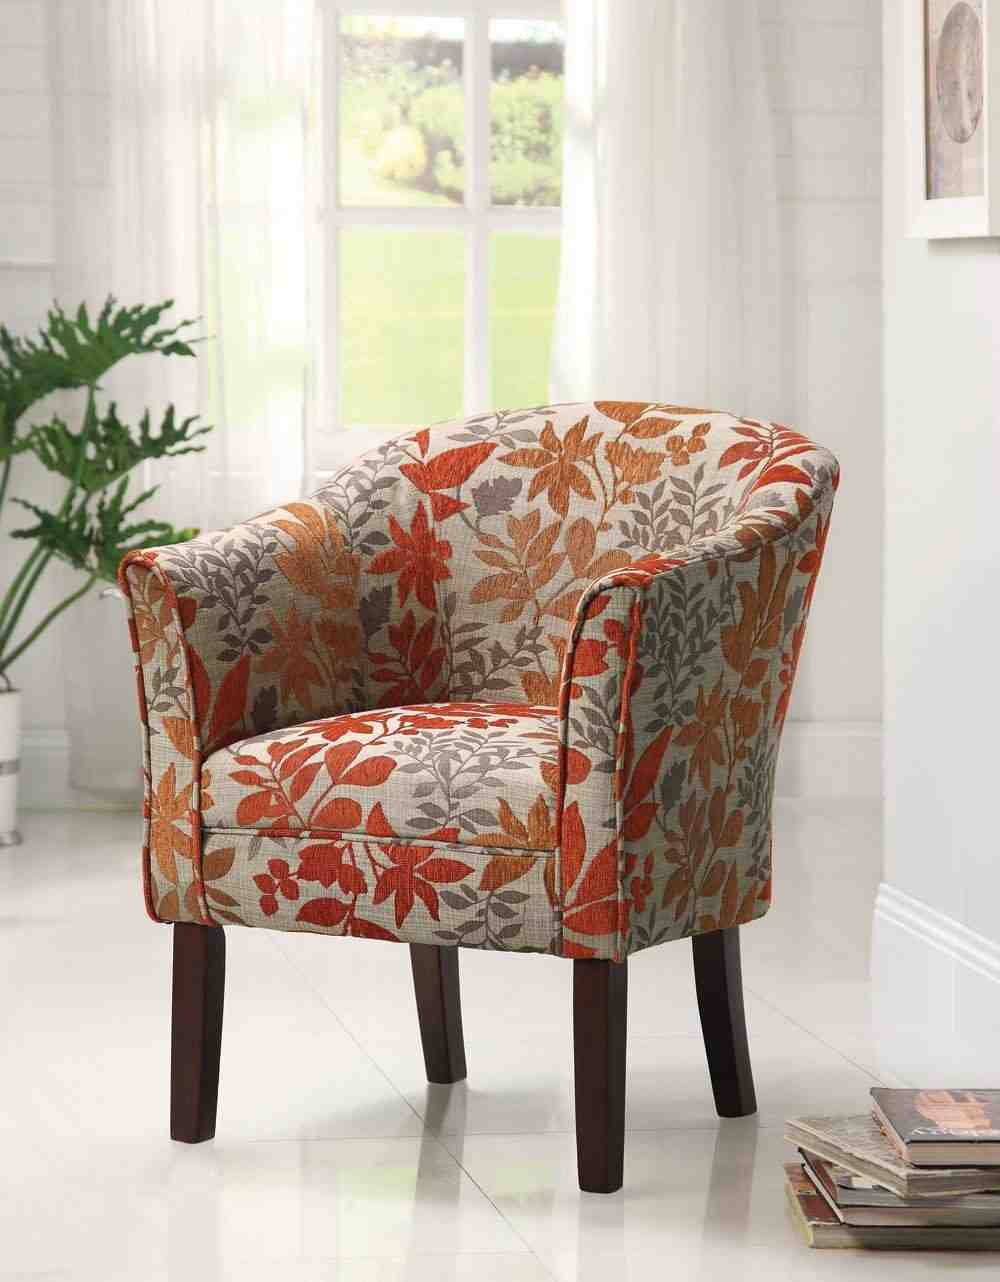 Decorative Accent Chairs - Decor Ideas